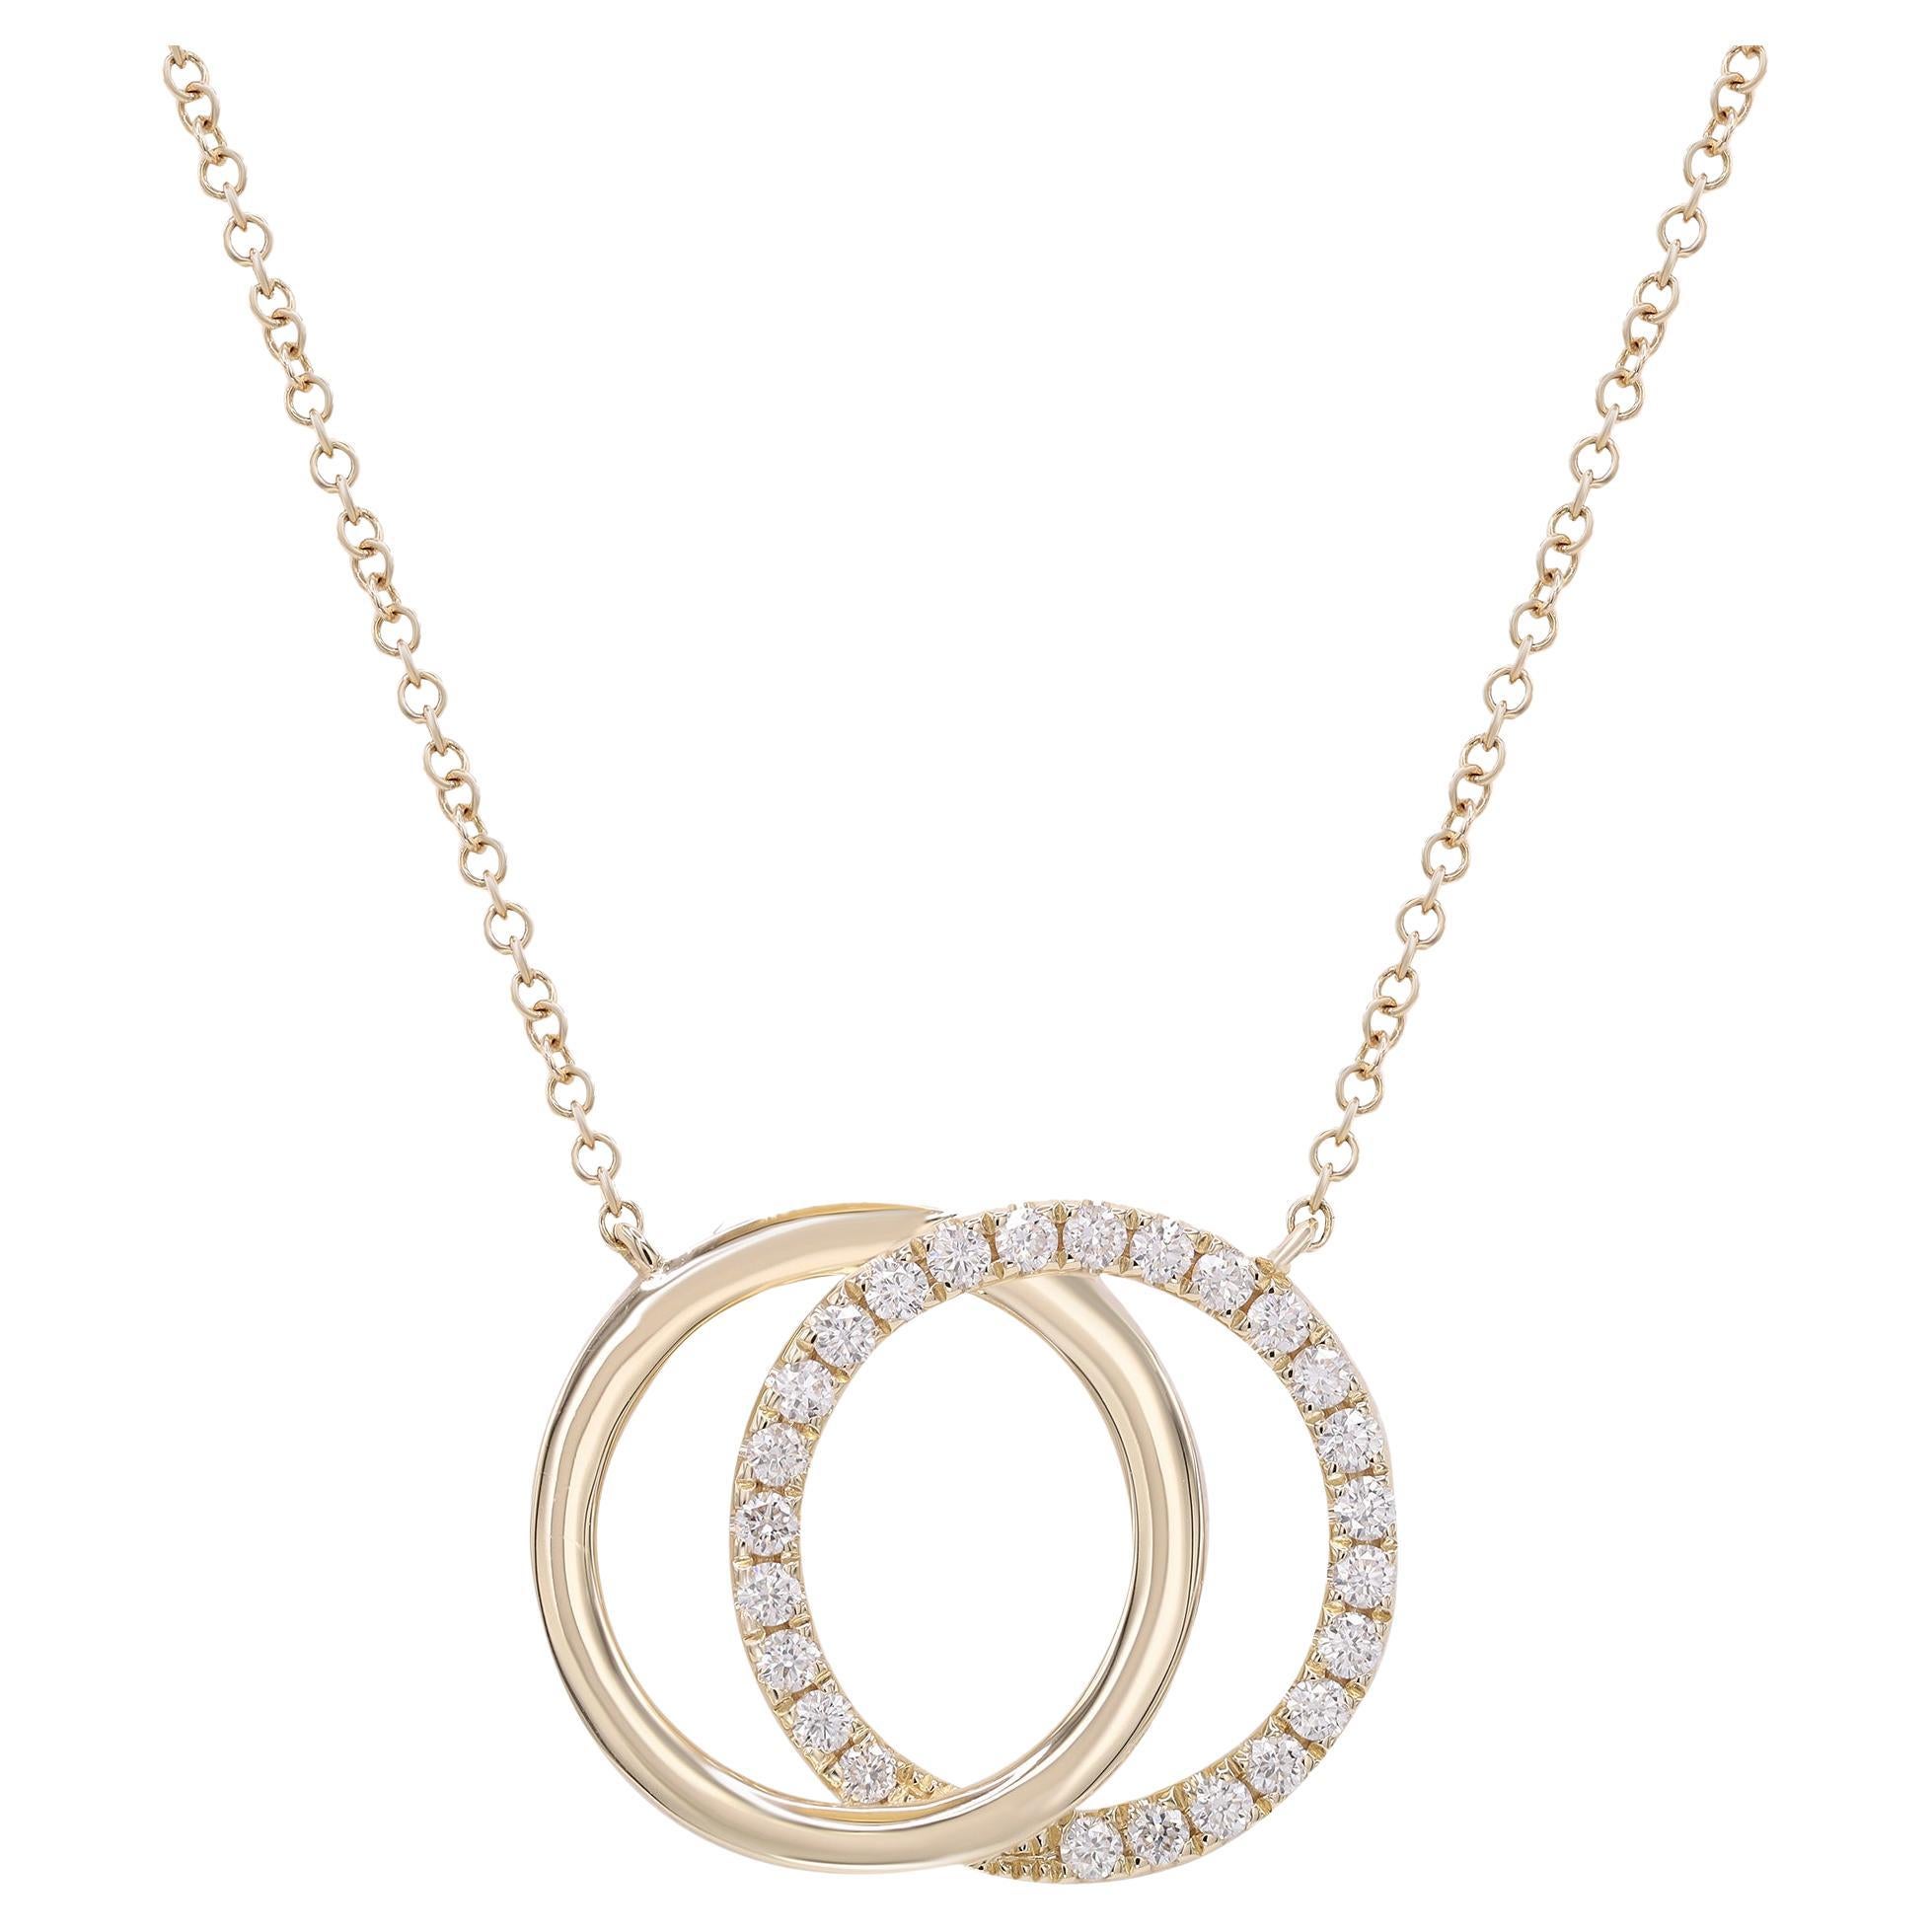 Rachel Koen Diamond Interlocking Rings Pendant Necklace 14K Yellow Gold 0.31cttw For Sale